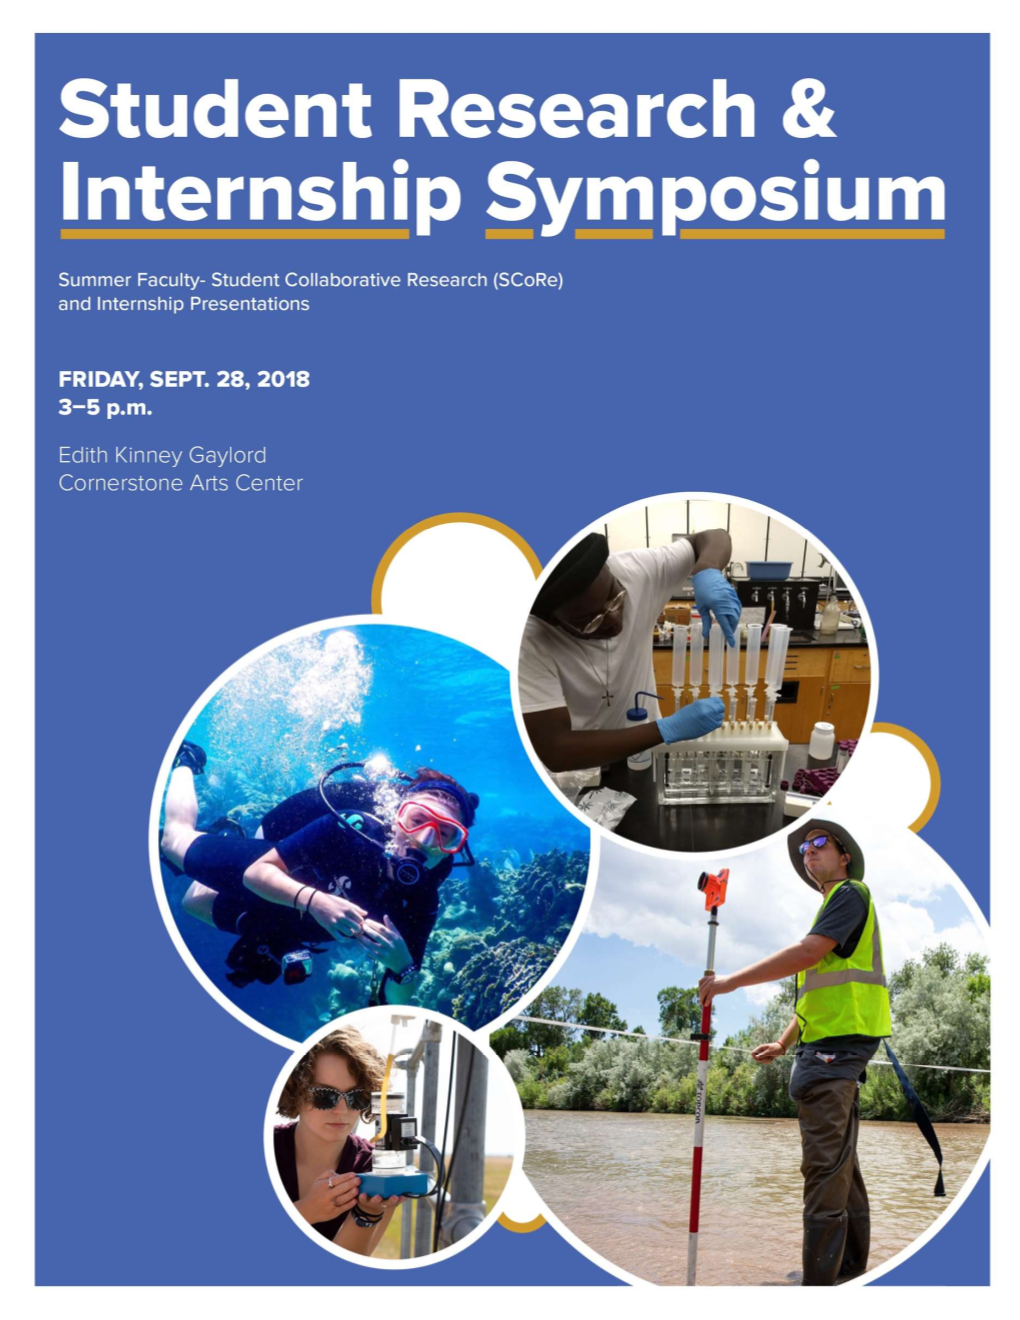 Student Research & Internship Symposium